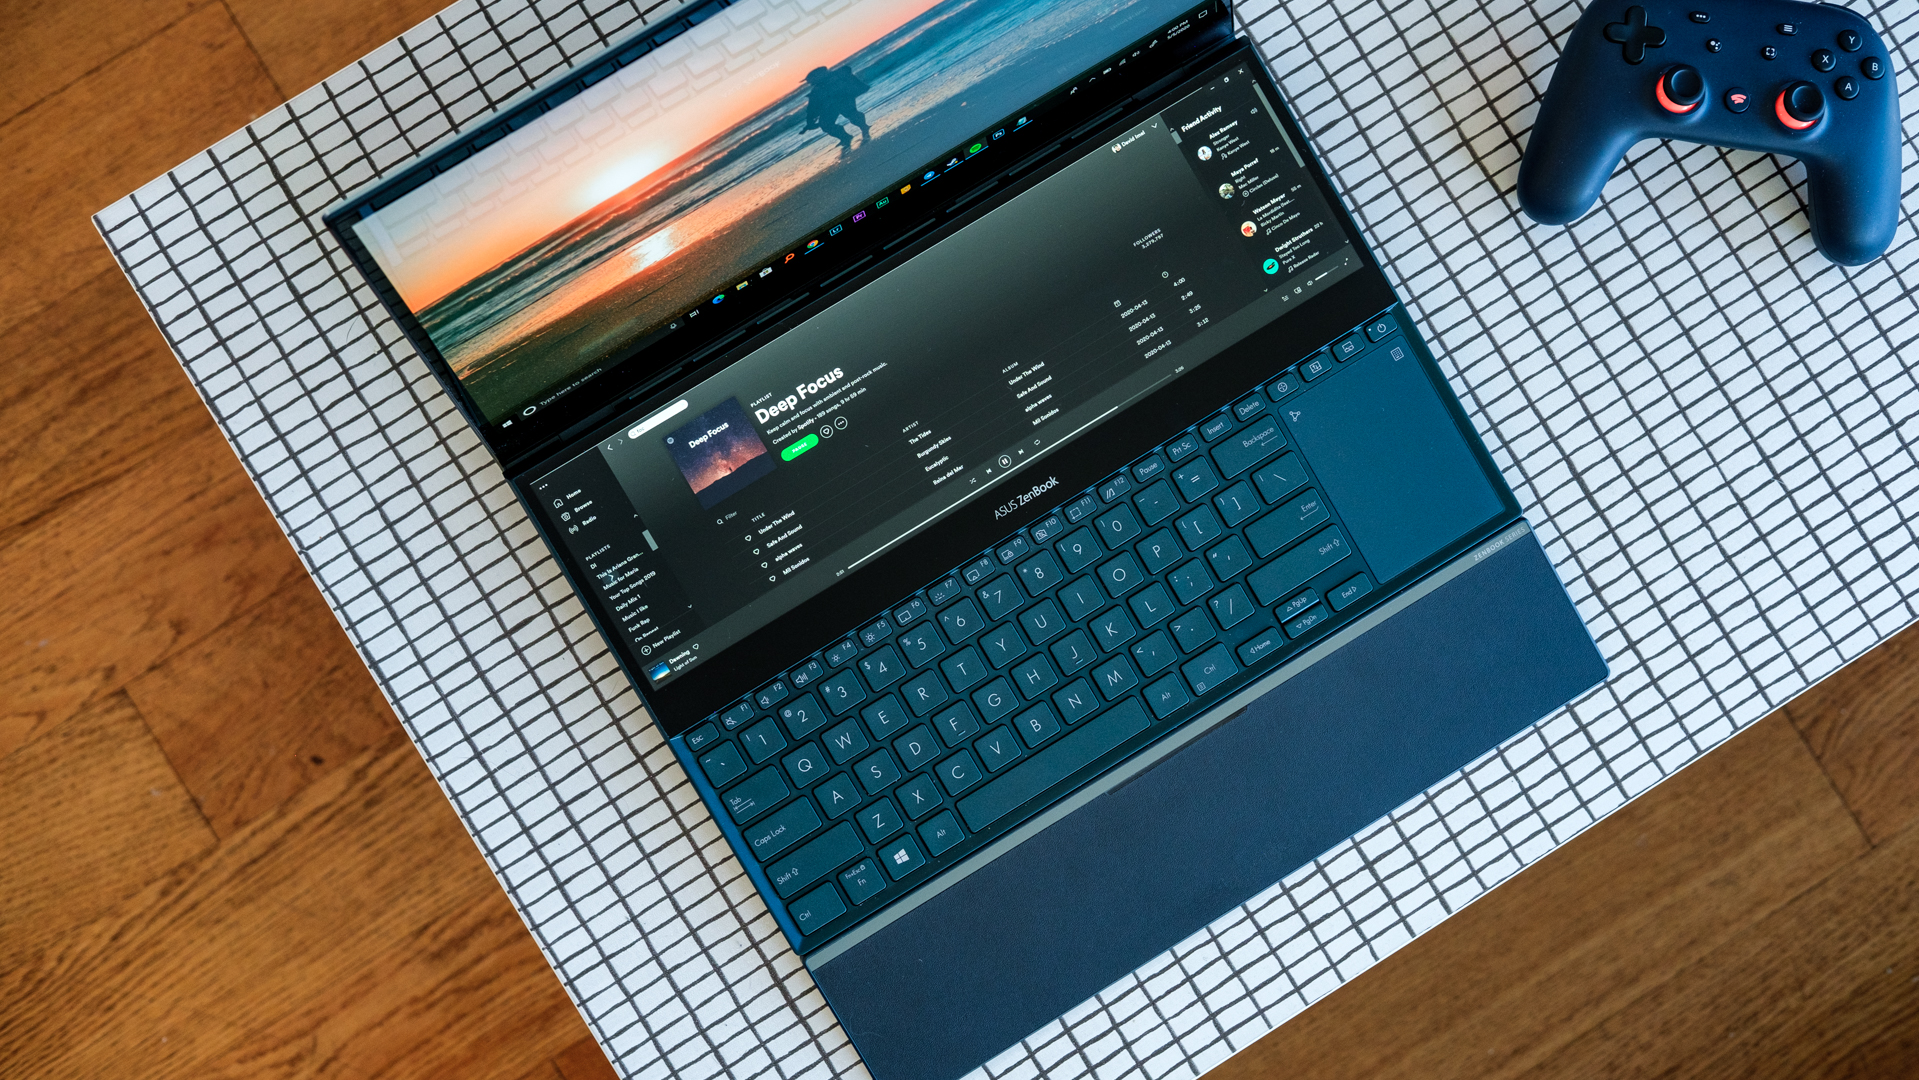 Asus Zenbook Pro Duo screen and keyboard top down